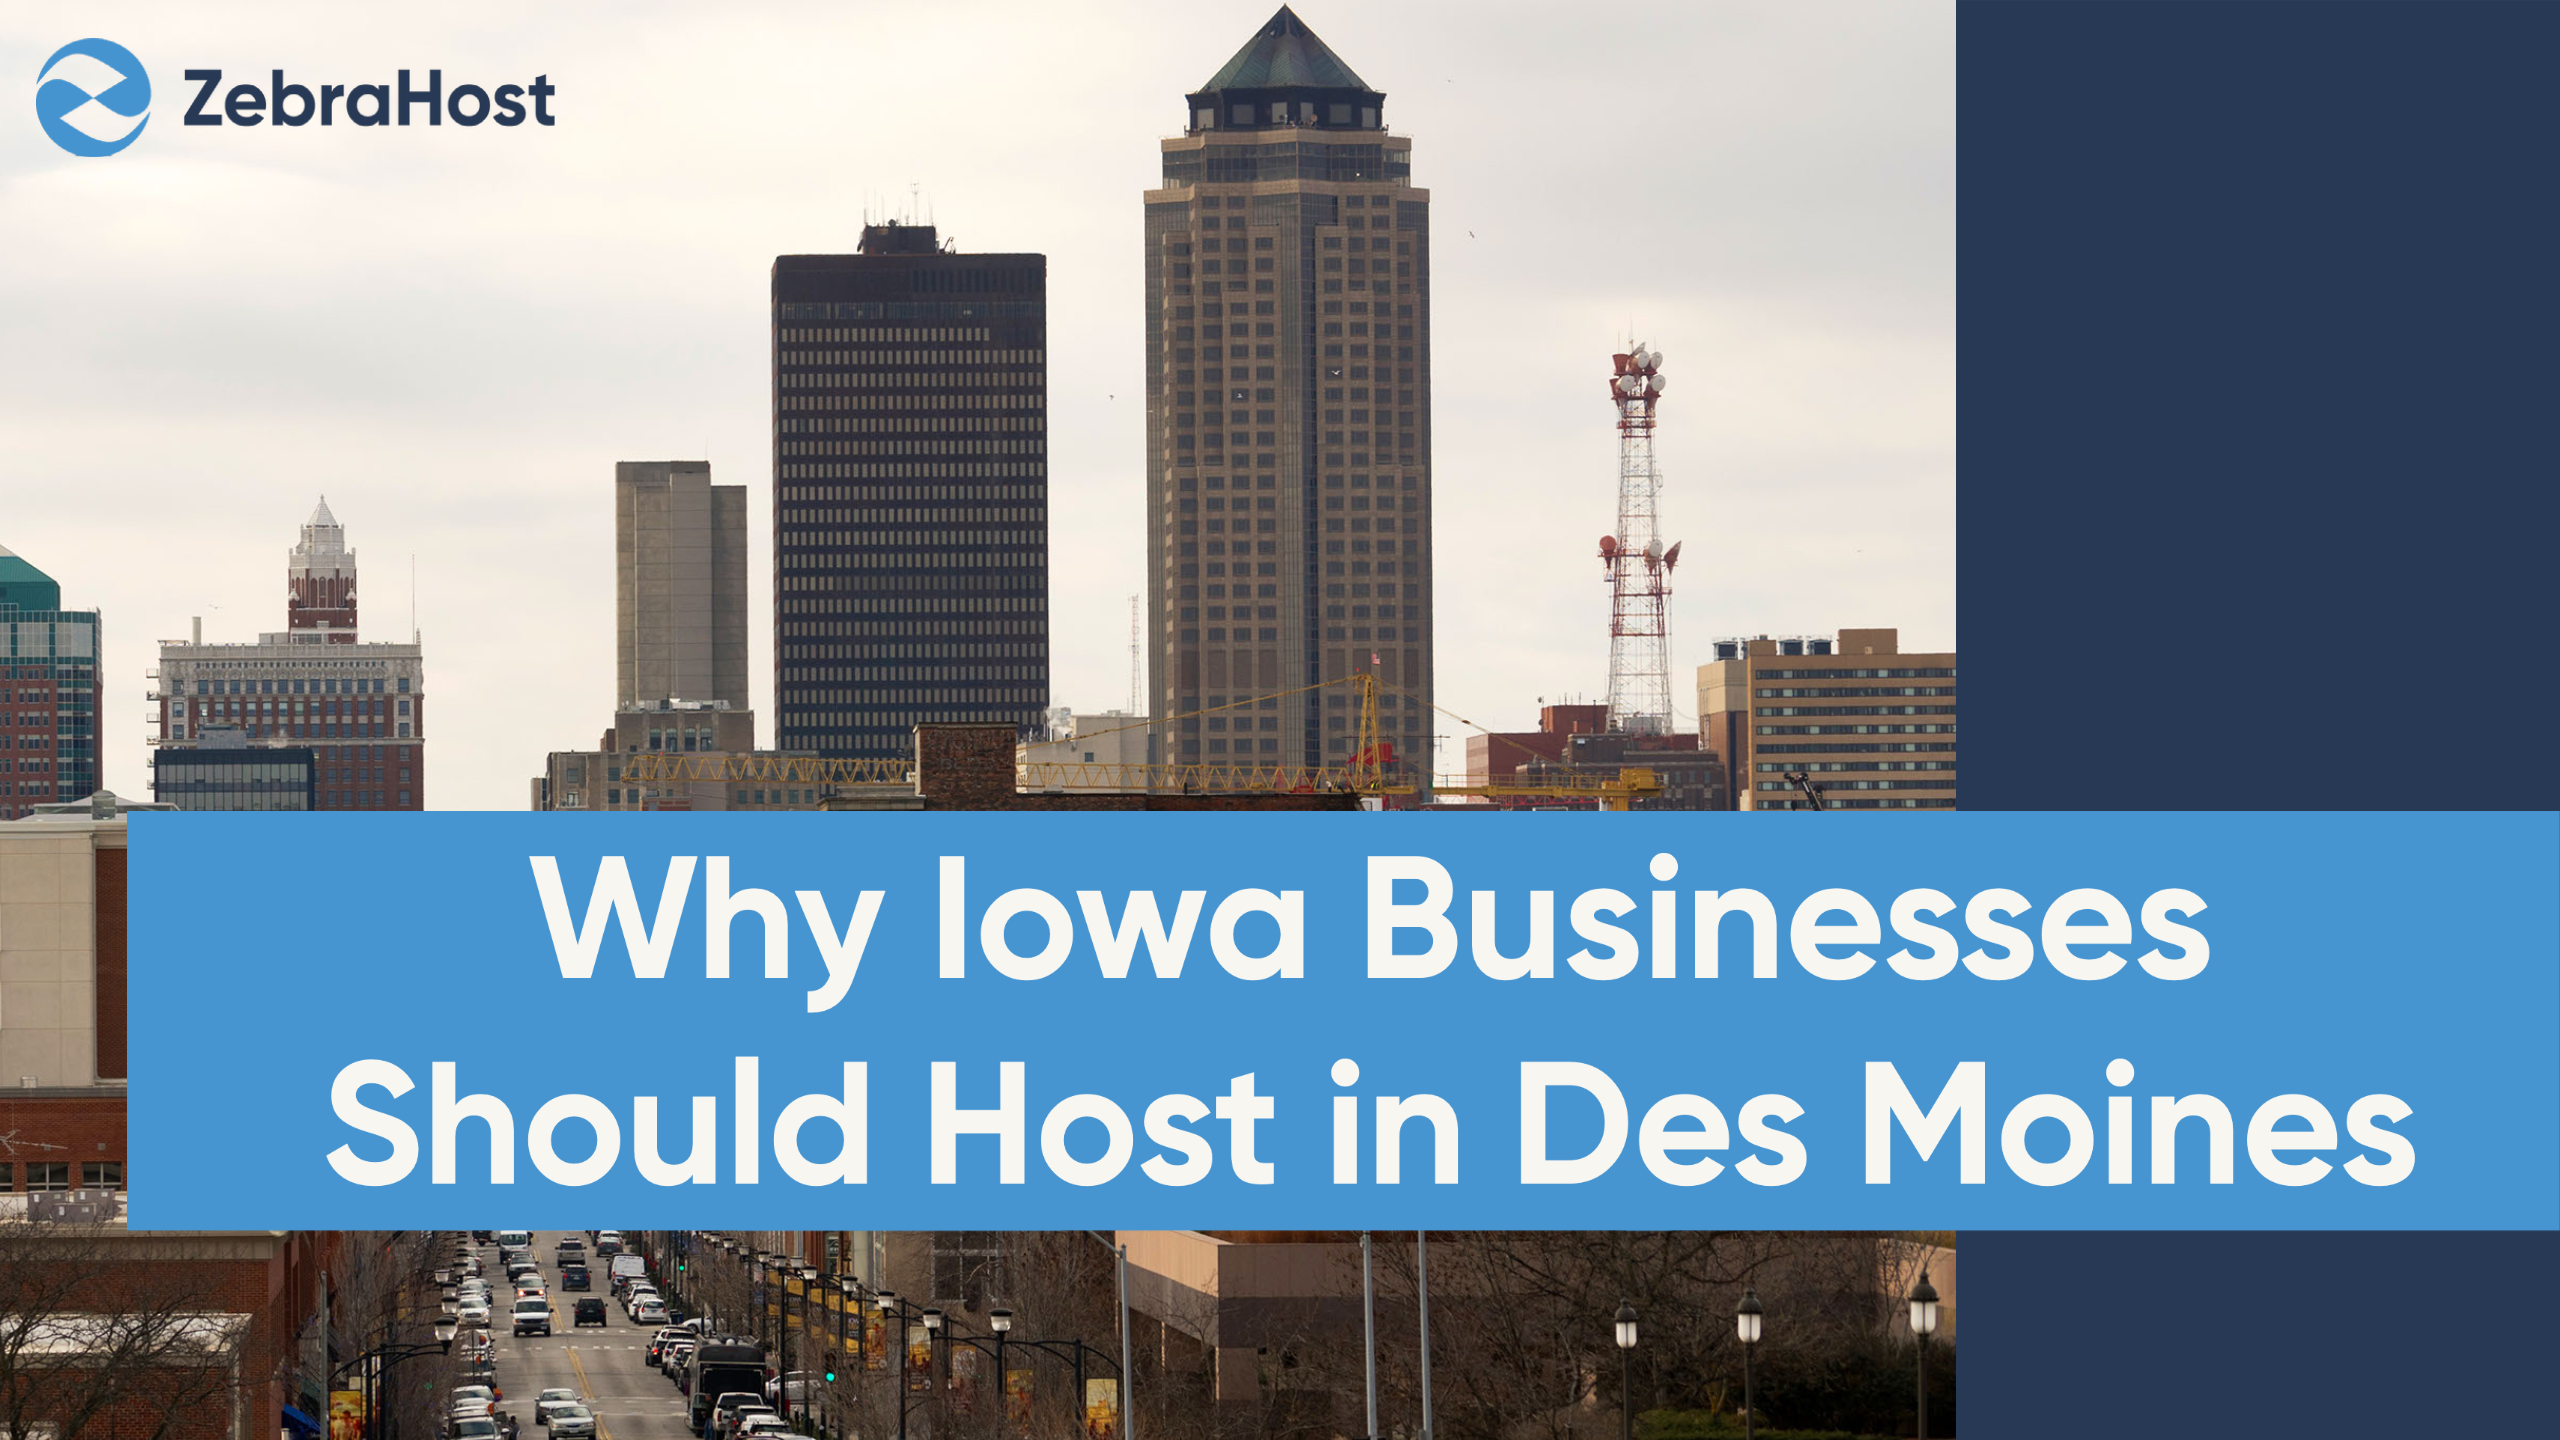 Iowa Businesses Should Host in Des Moines